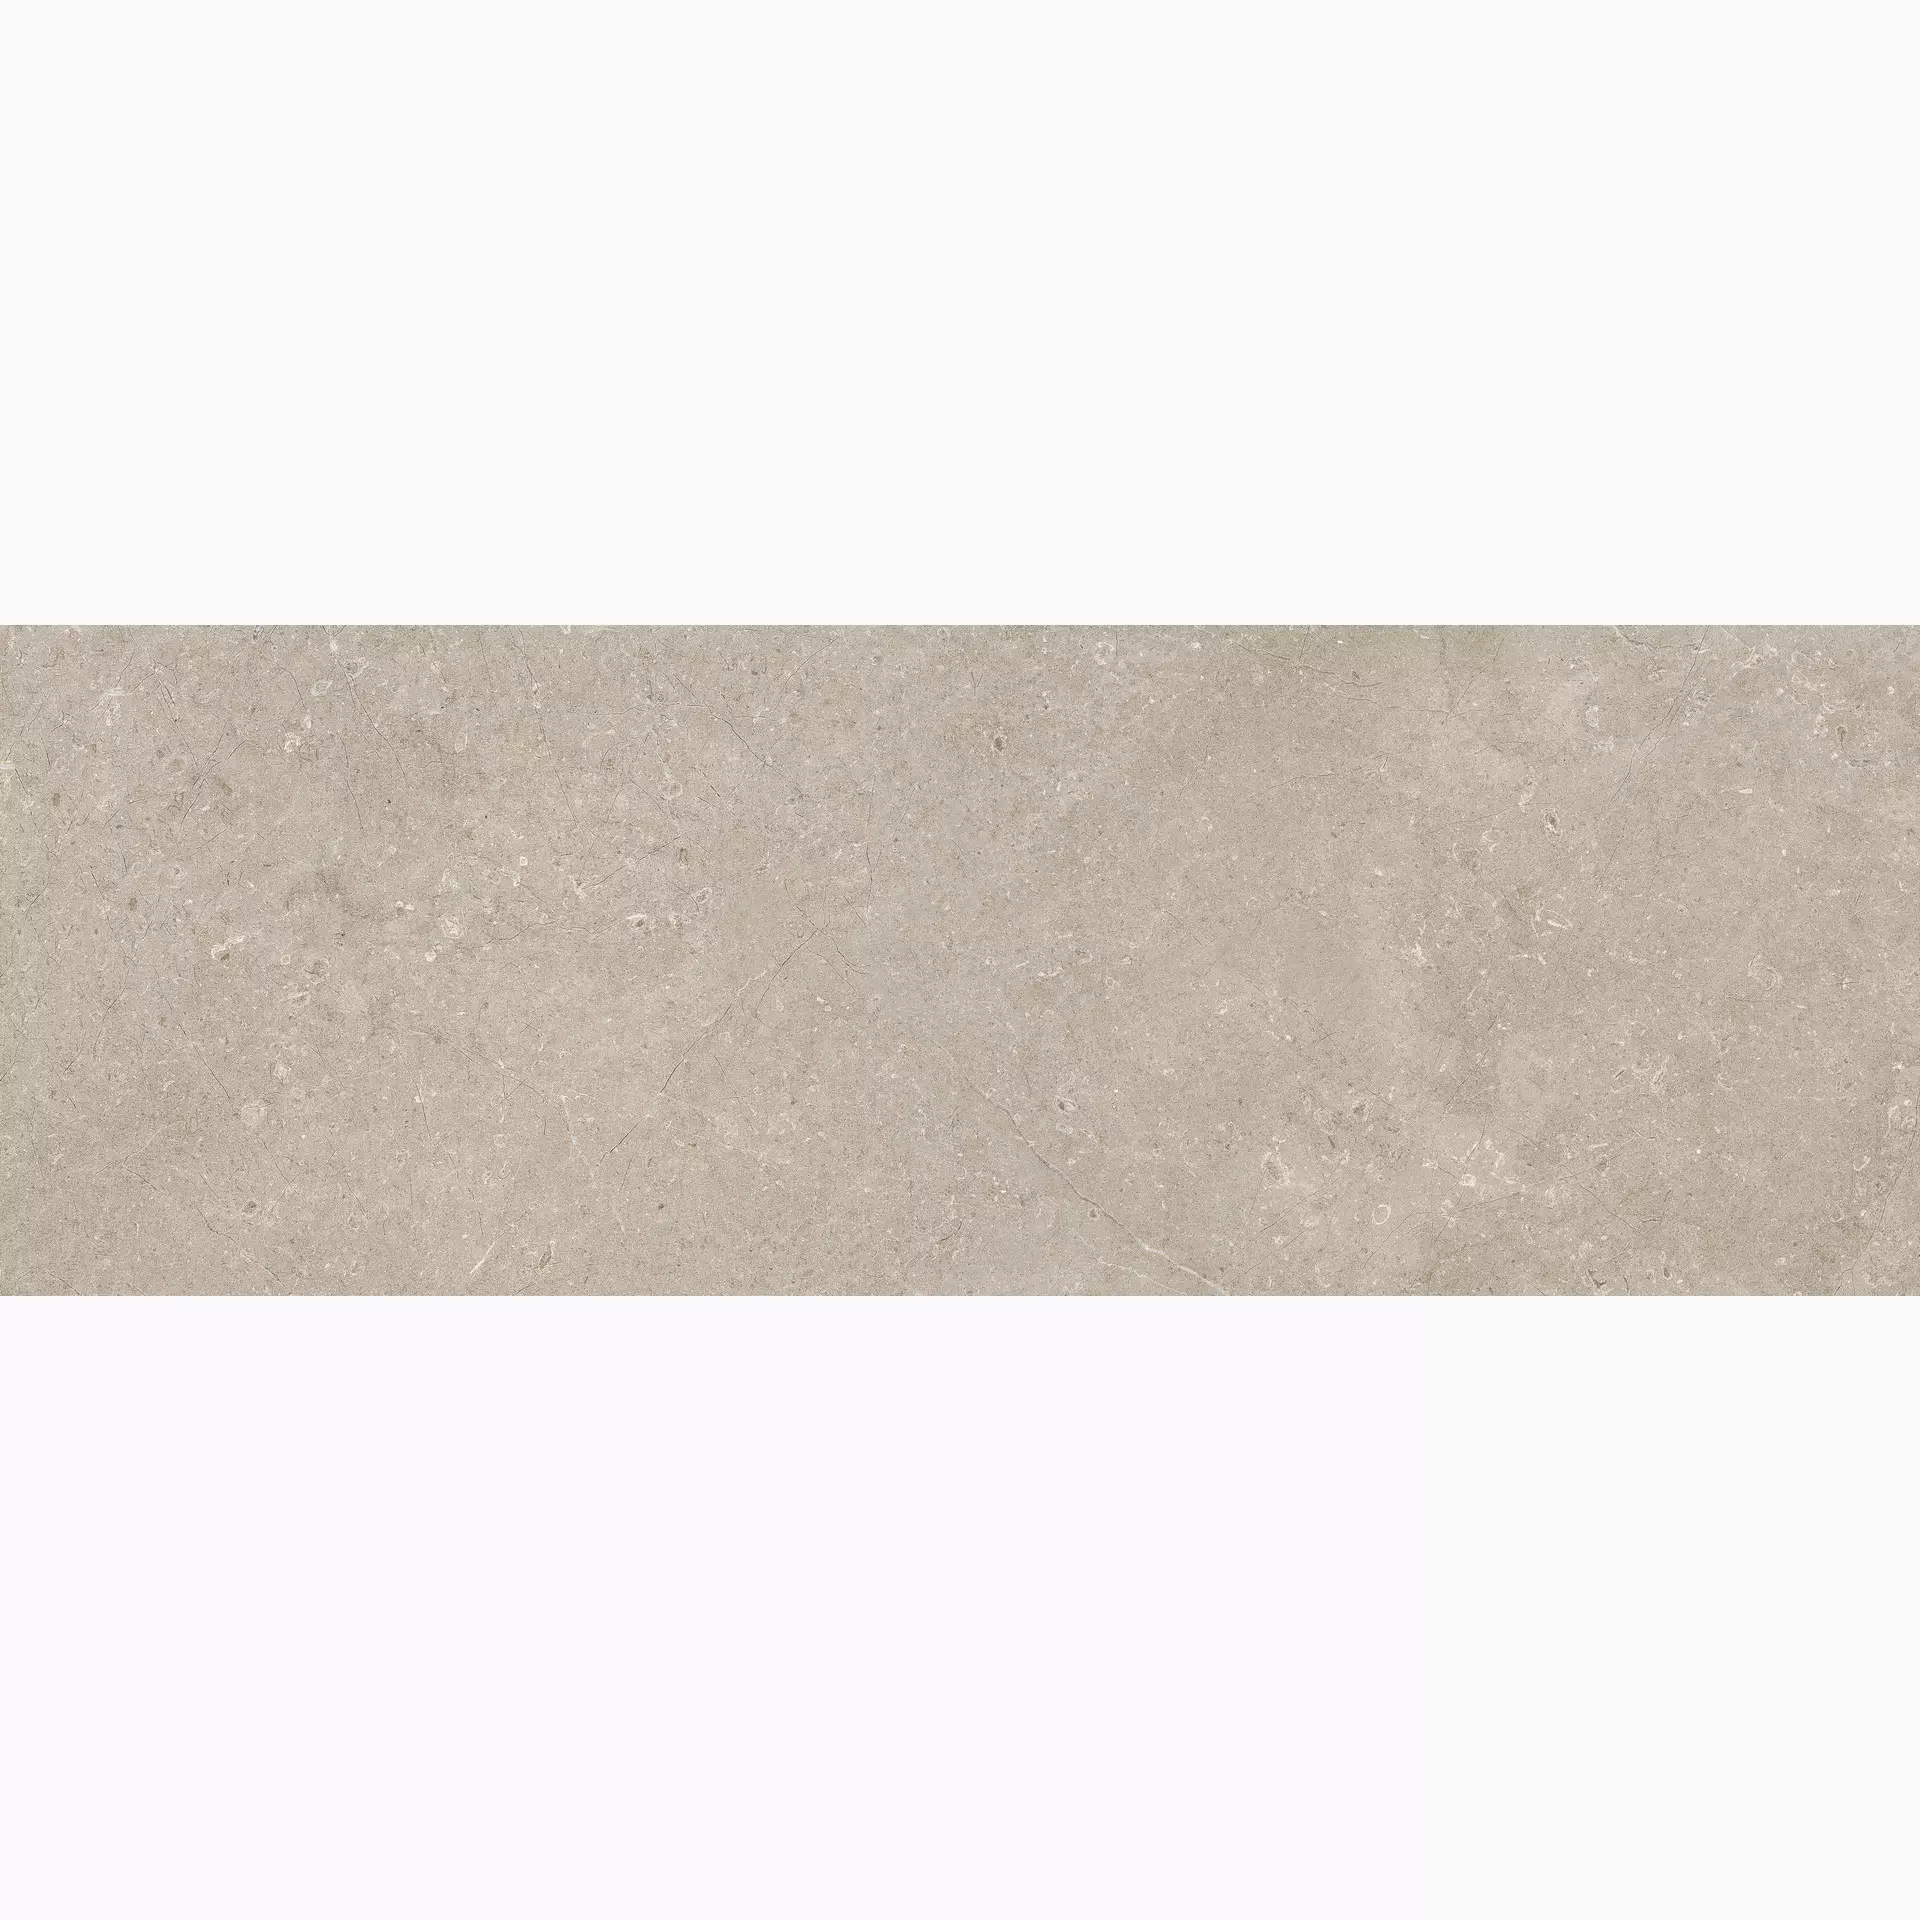 Marazzi Limestone Wall Taupe Naturale – Matt MFCF 40x120cm rectified 6mm